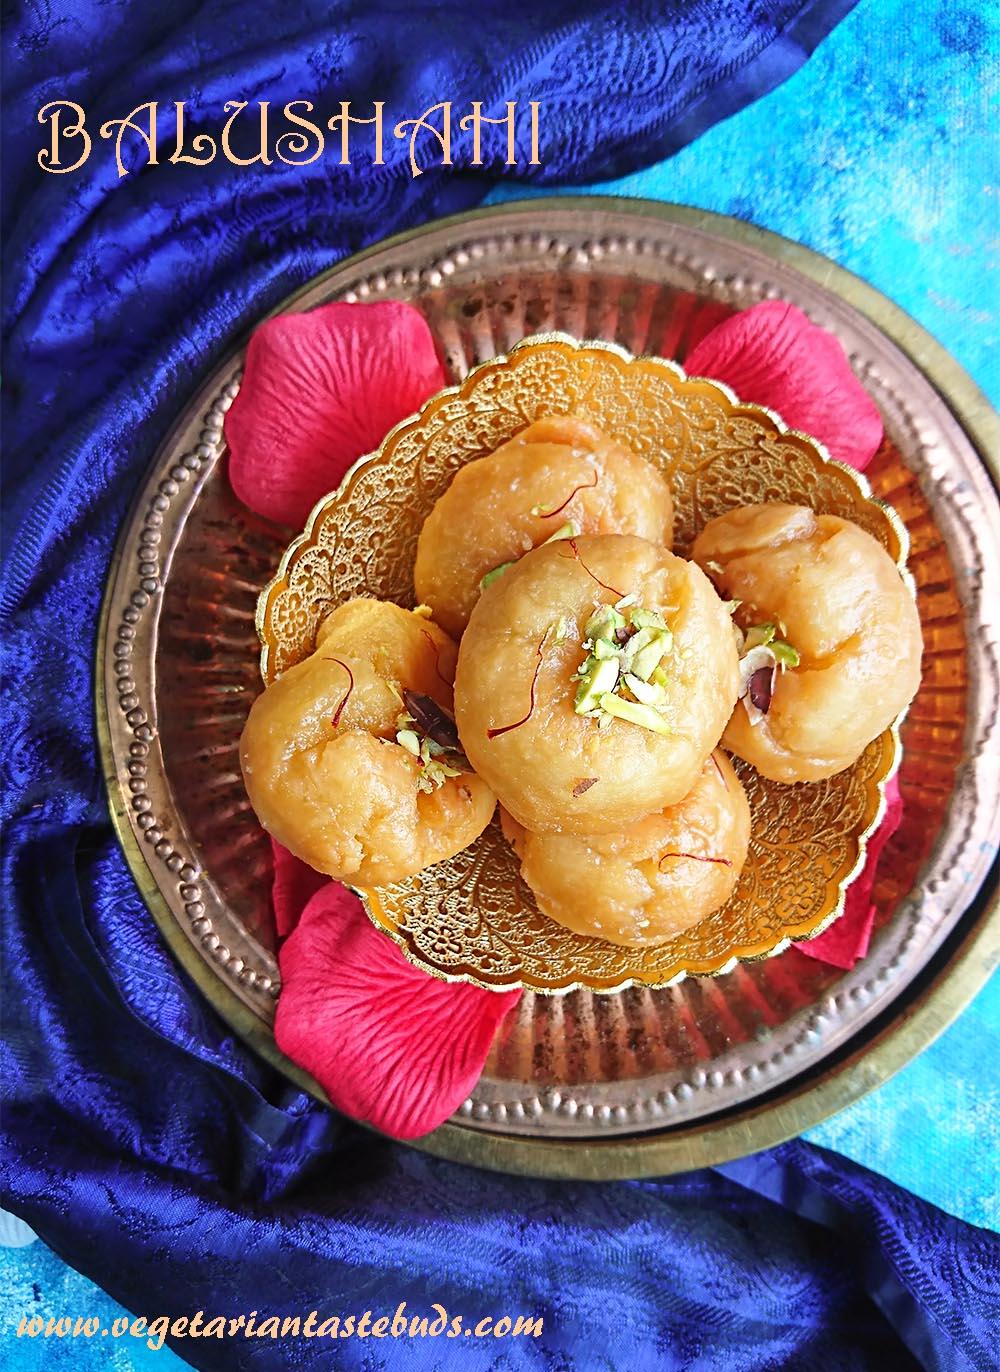 50+ Diwali Sweets and Snacks Recipes 2020 | Easy Diwali Sweets Recipes | Diwali Snacks Recipes | Easy Deepawali Sweets and Snacks Recipes 2020 | Vegetarian Tastebuds